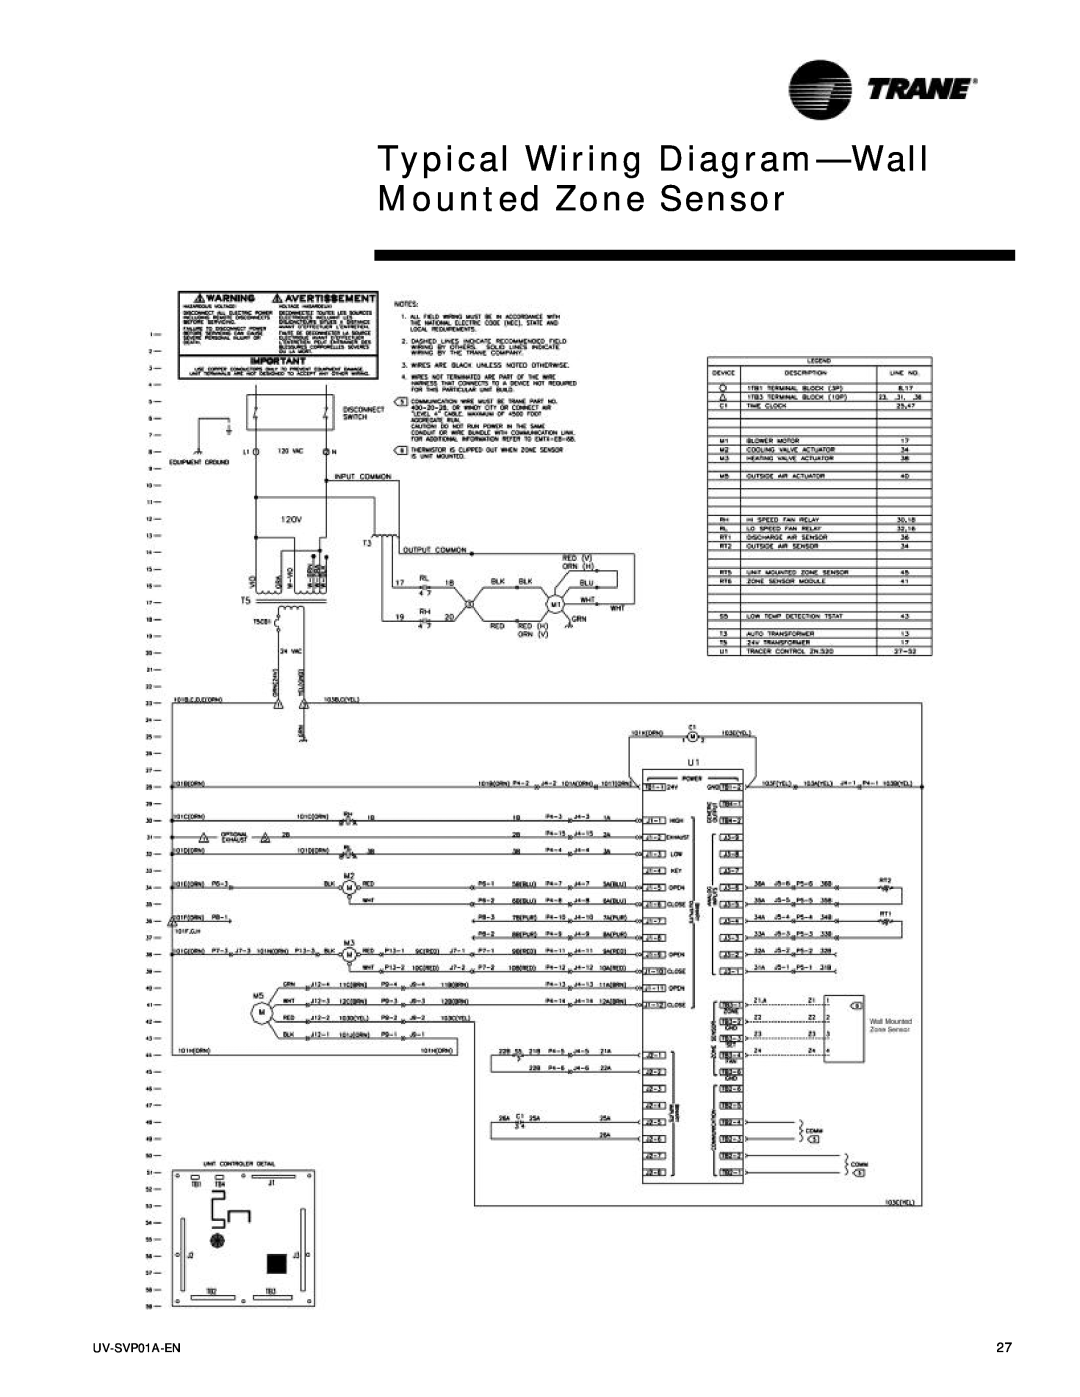 Trane ZN.520, Tracer Unit Ventilator manual Typical Wiring Diagram-Wall Mounted Zone Sensor, UV-SVP01A-EN 